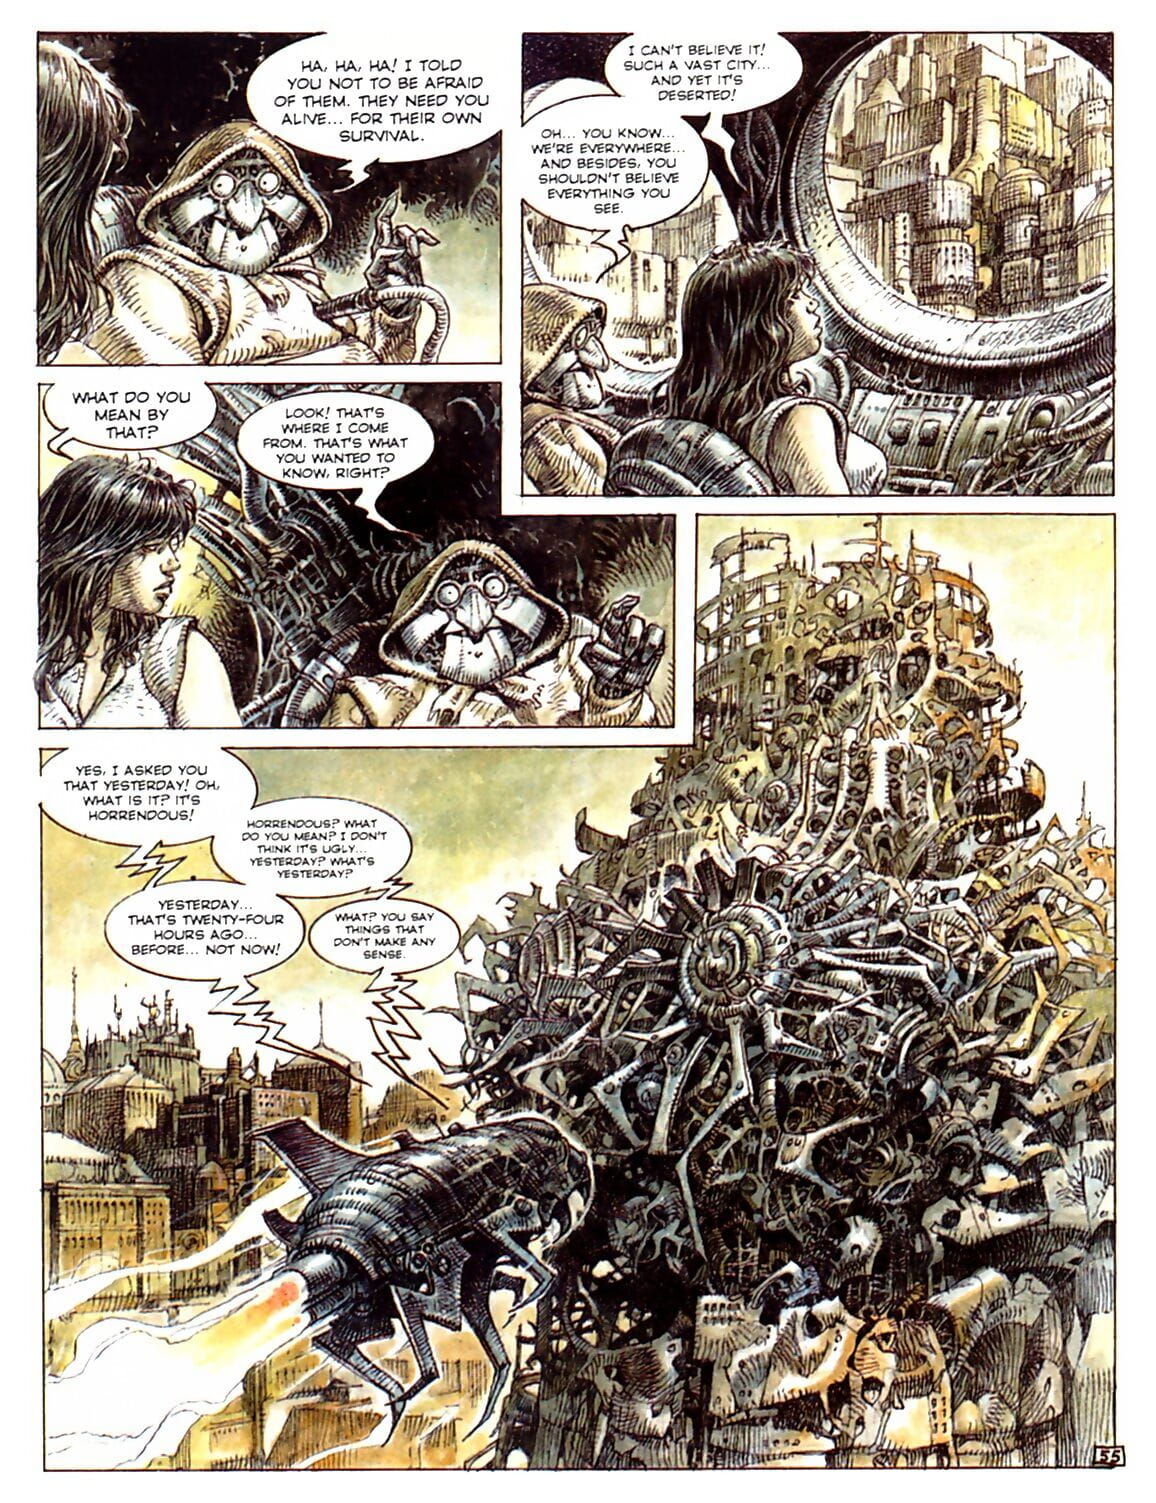 Druuna 7 - The Forgotten Planet - part 2 page 1